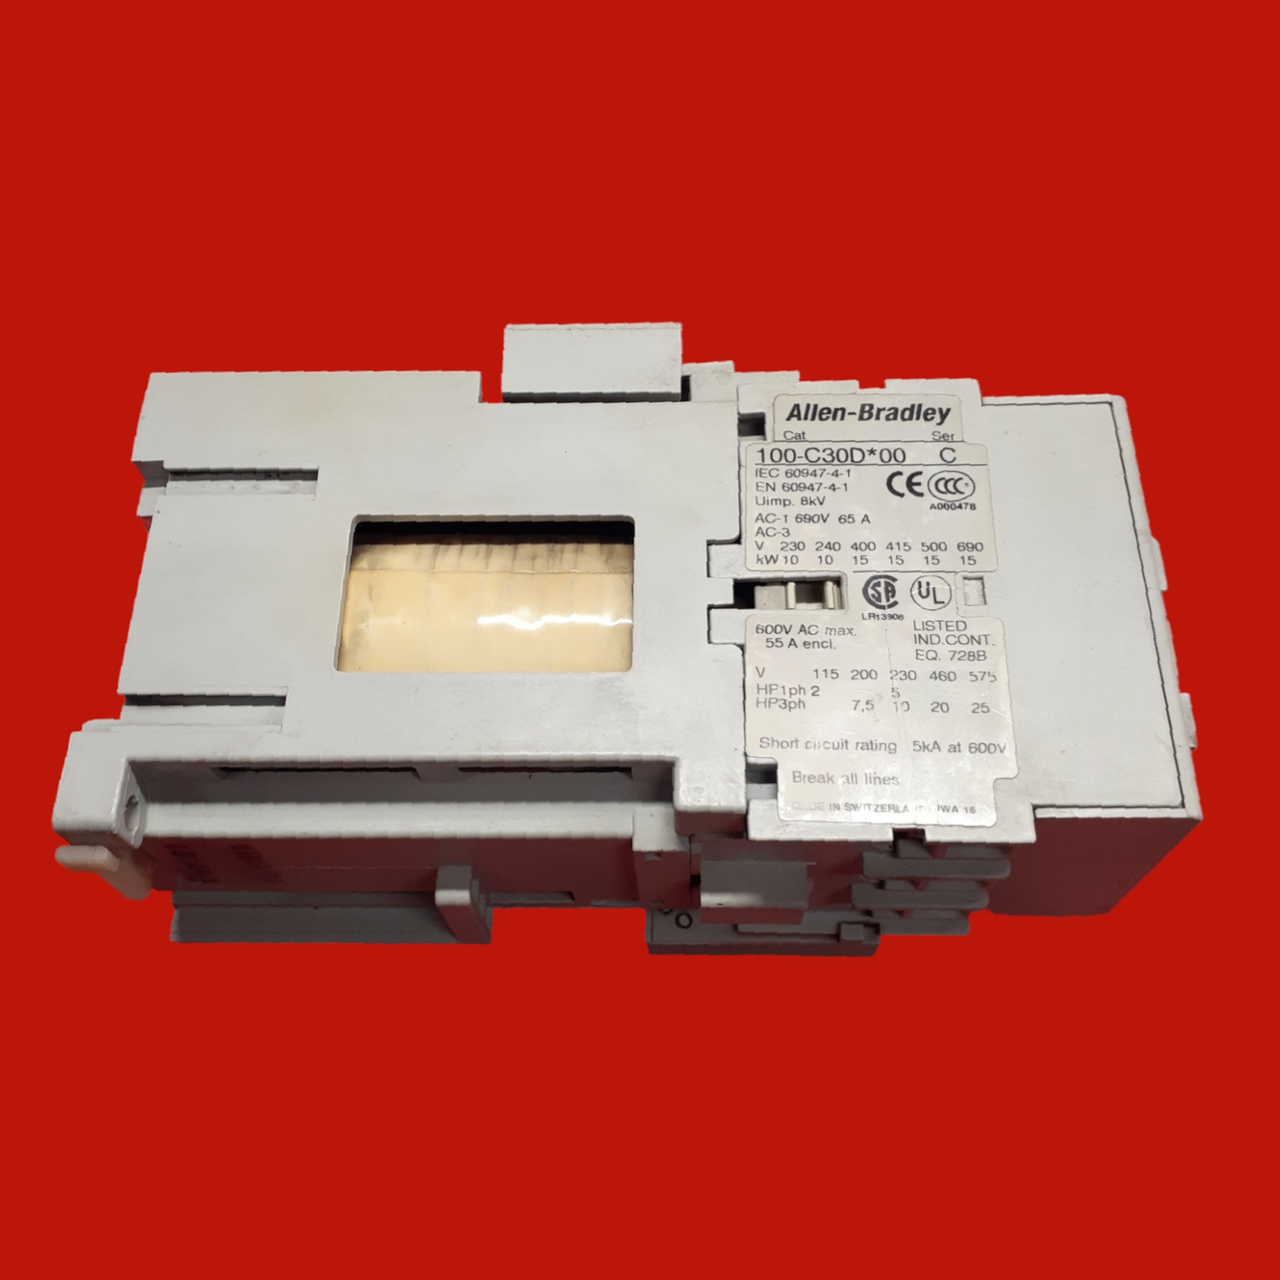 Allen-Bradley IEC 30 A Contactor, 100-C30D00 Series C